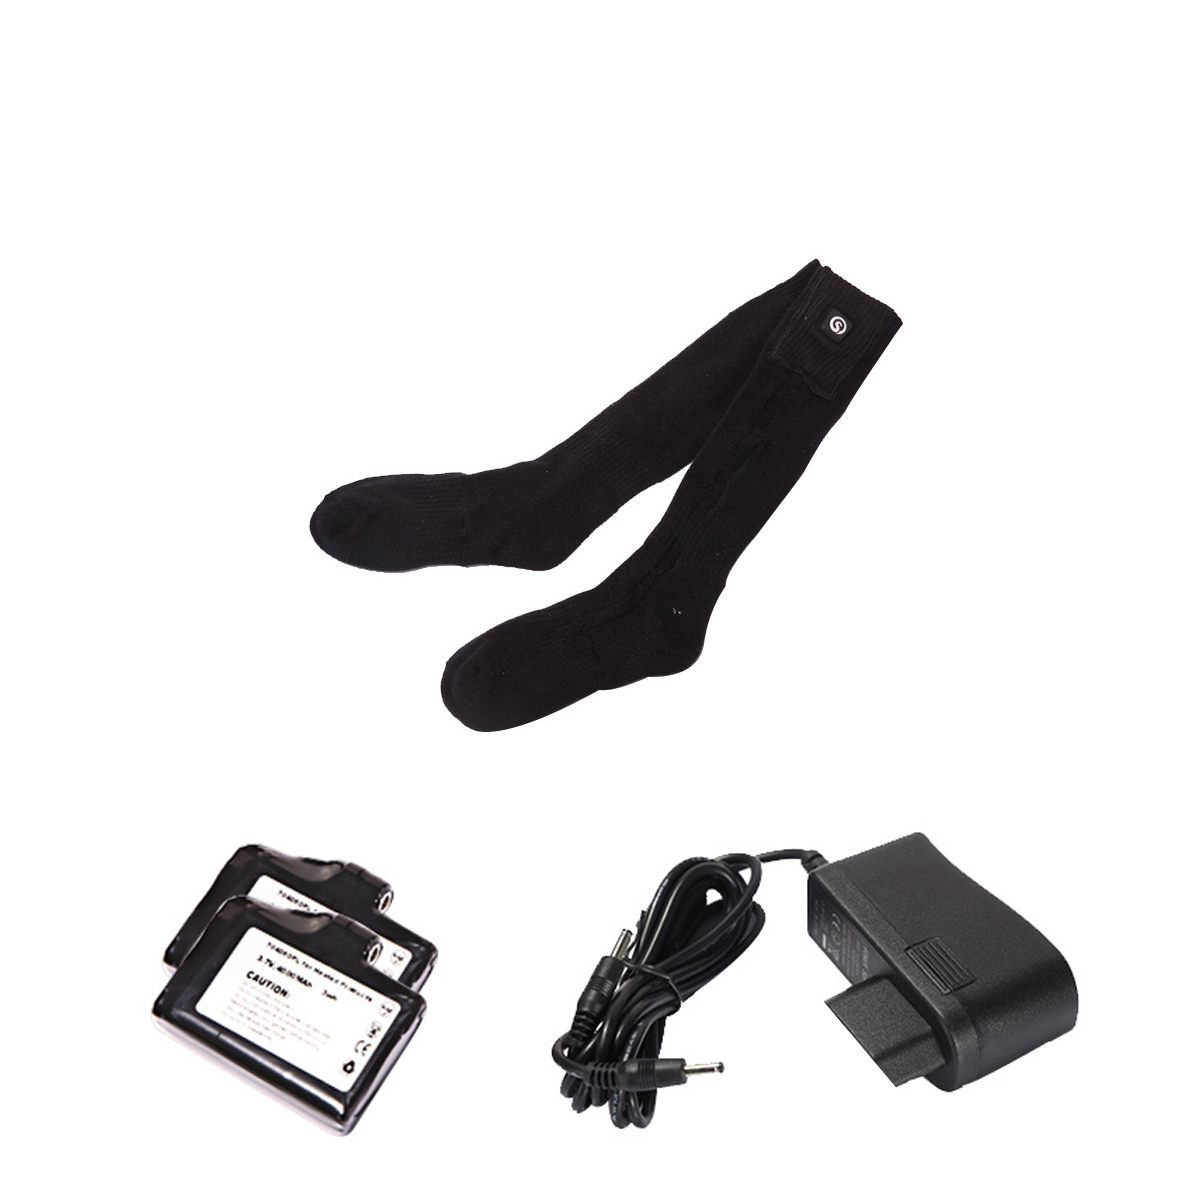 SAVIOR-74V-2200mAh-Electric-Heated-Socks-Rechargeable-Battery-Feet-Warmer-For-Skiing-1425472-10